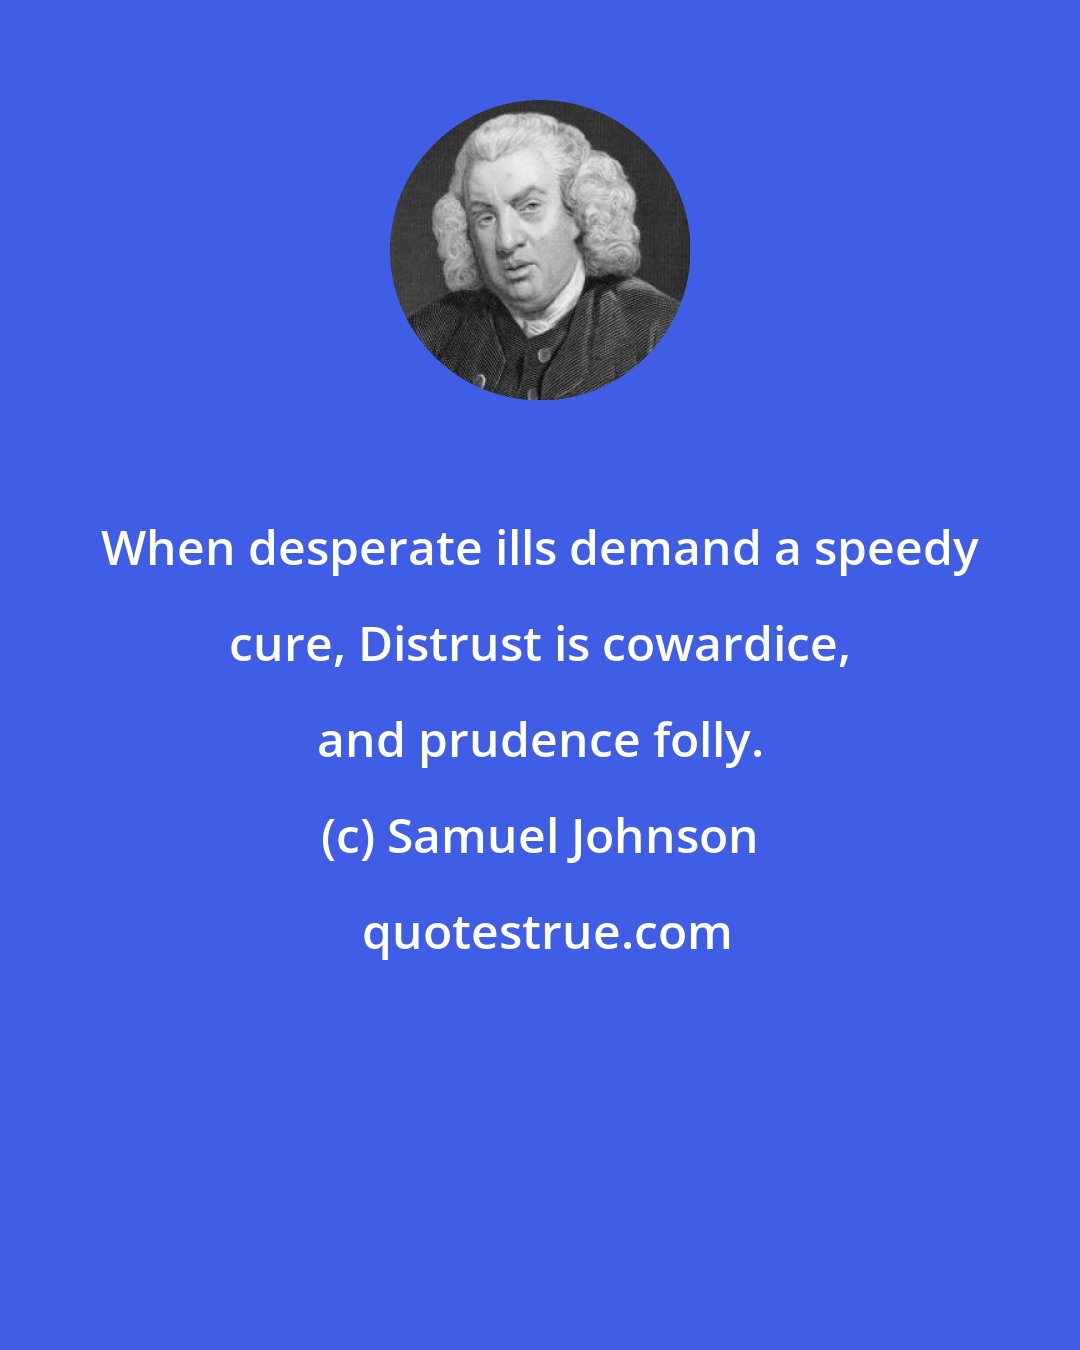 Samuel Johnson: When desperate ills demand a speedy cure, Distrust is cowardice, and prudence folly.